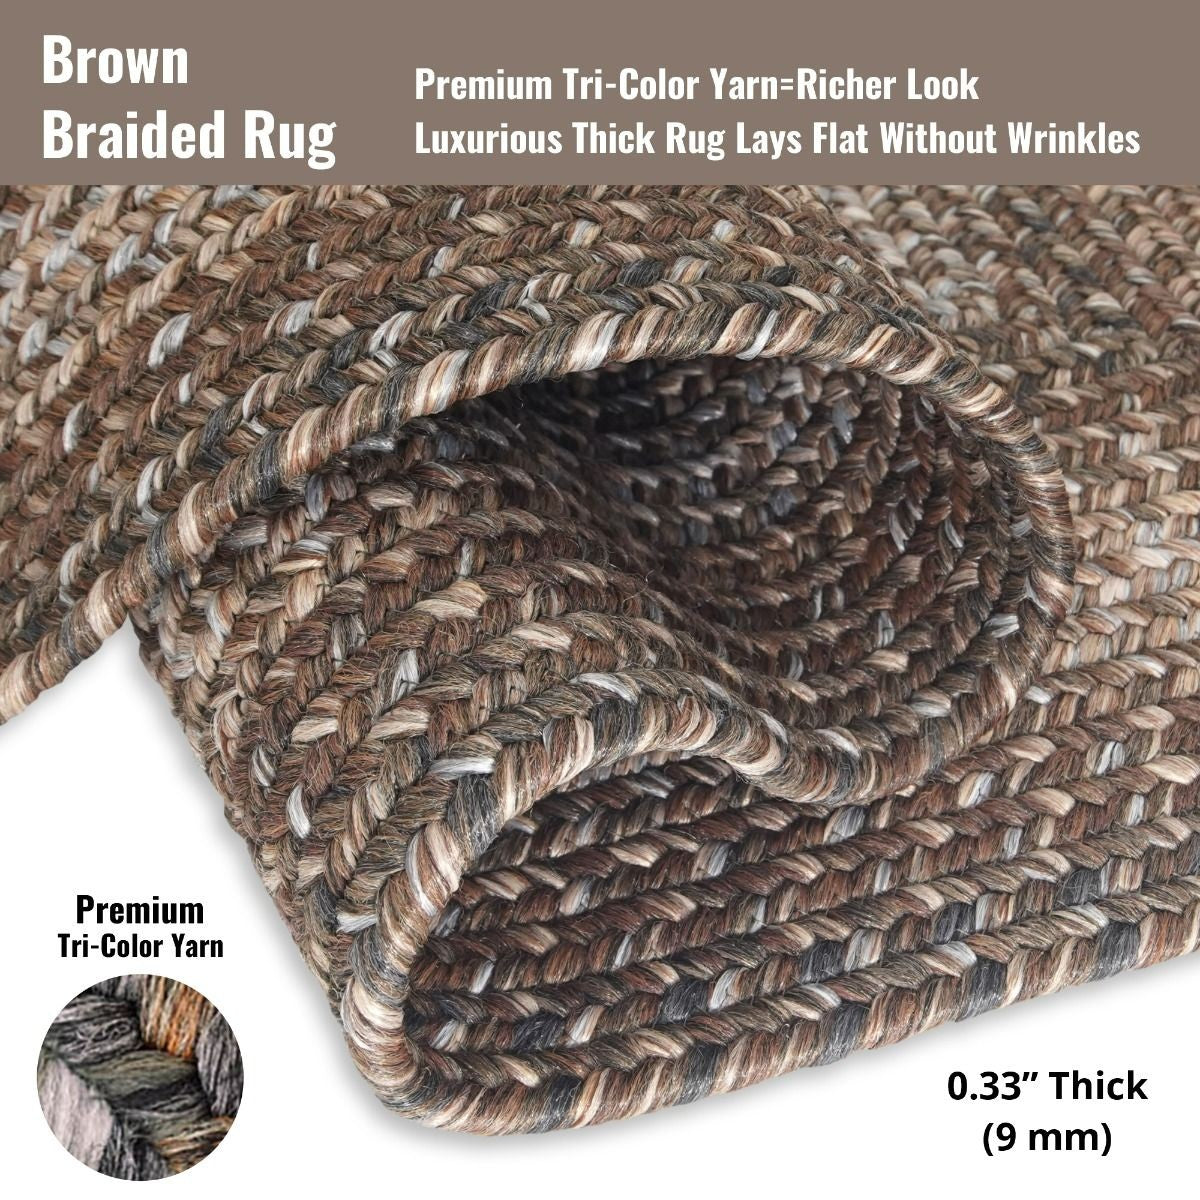 Wildwood Brown Ultra Durable Braided Oval Rugs